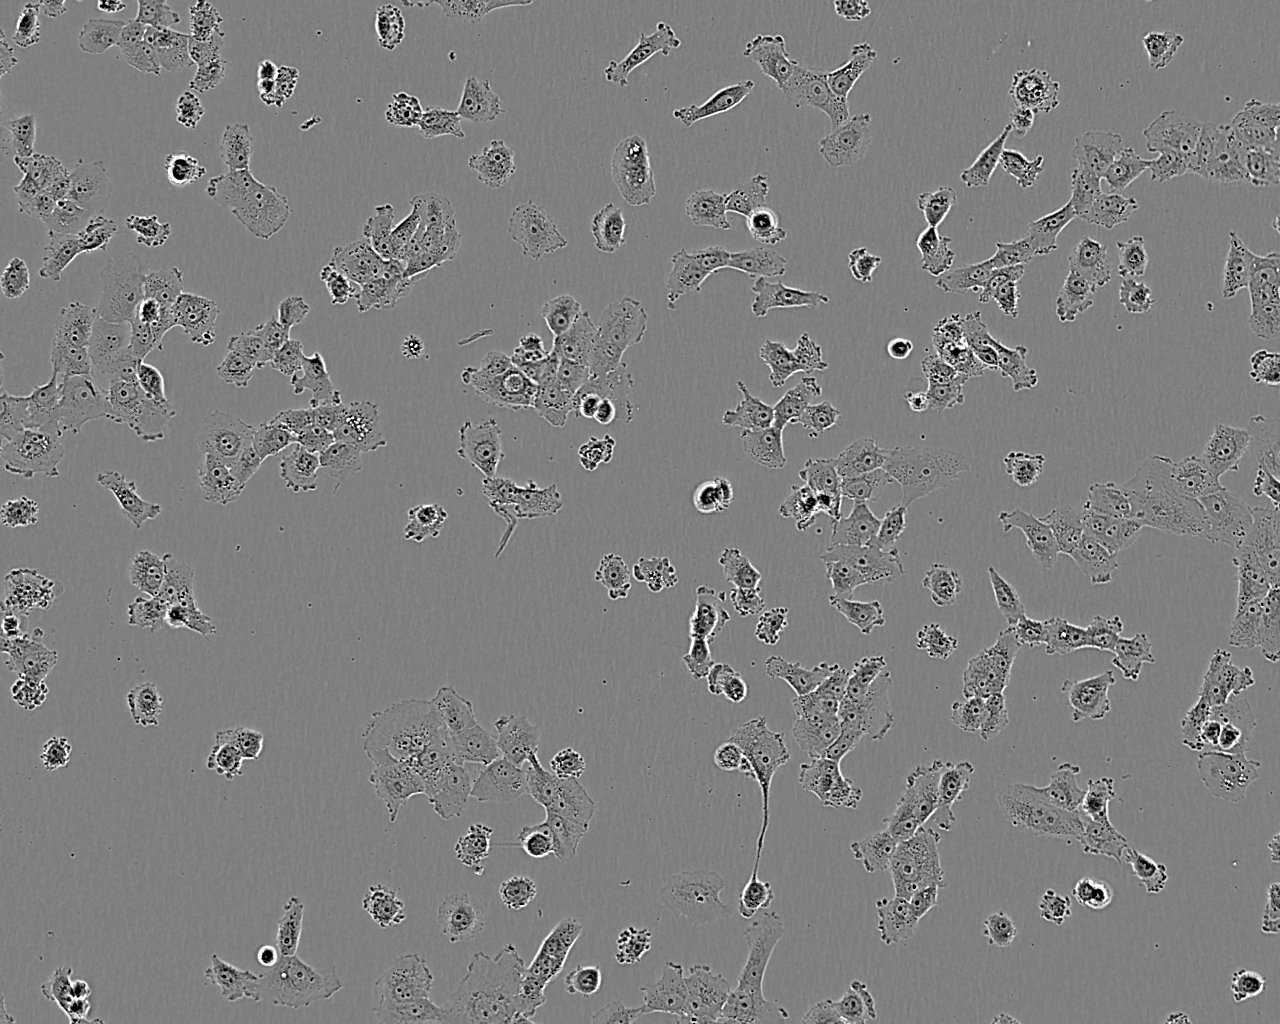 MIA PaCa-2 epithelioid cells人胰腺导管癌细胞系,MIA PaCa-2 epithelioid cells